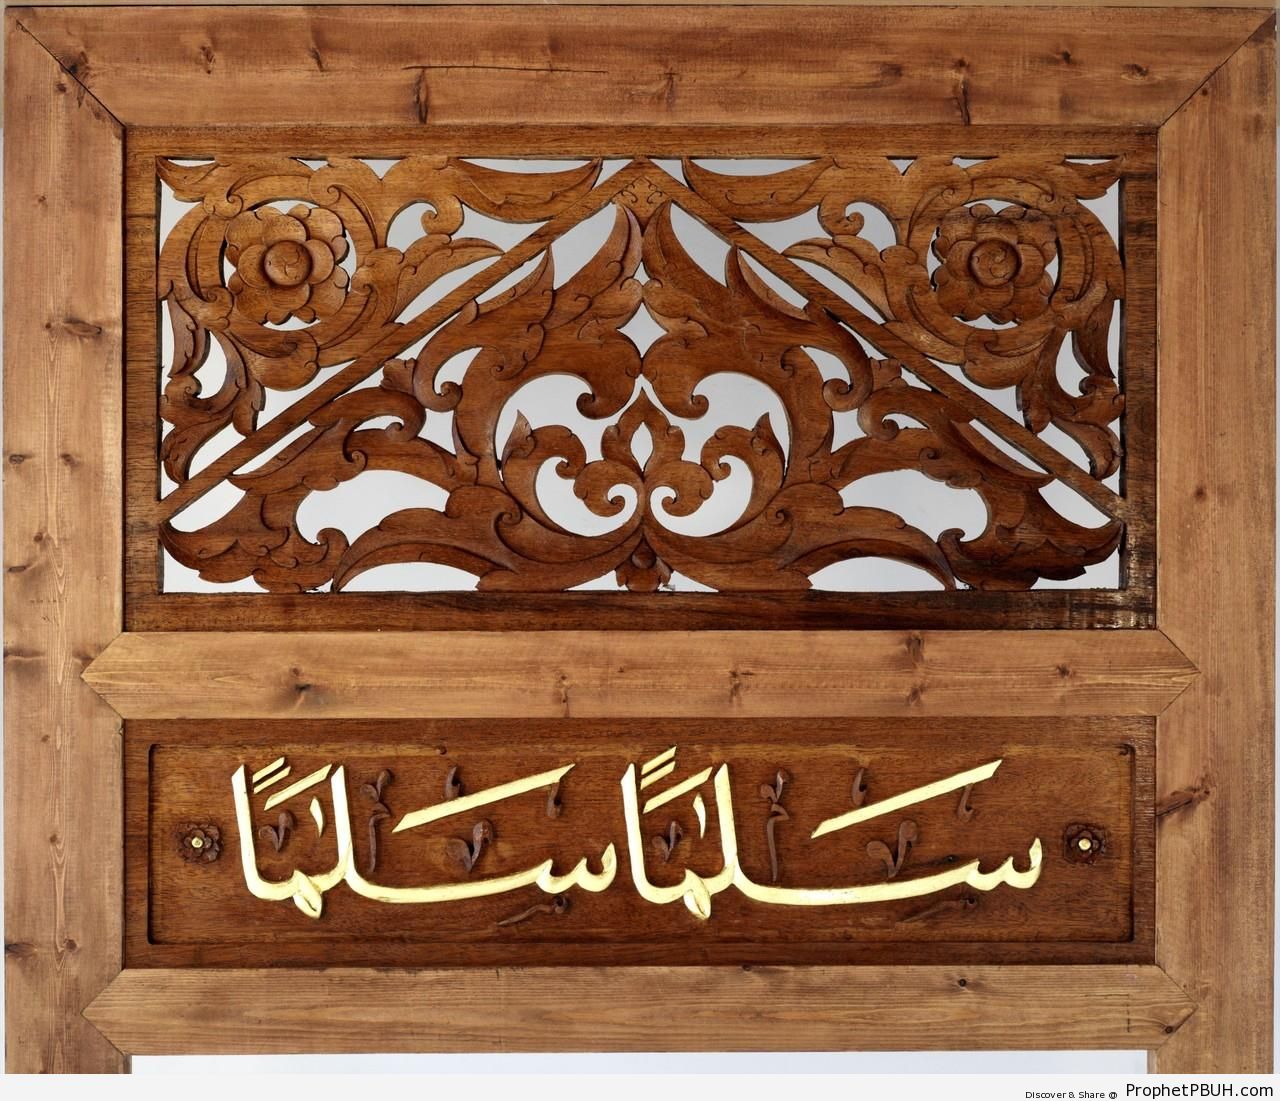 Salaaman Salaama (Quran 56-26) Calligraphy on Door - Islamic Calligraphy and Typography 